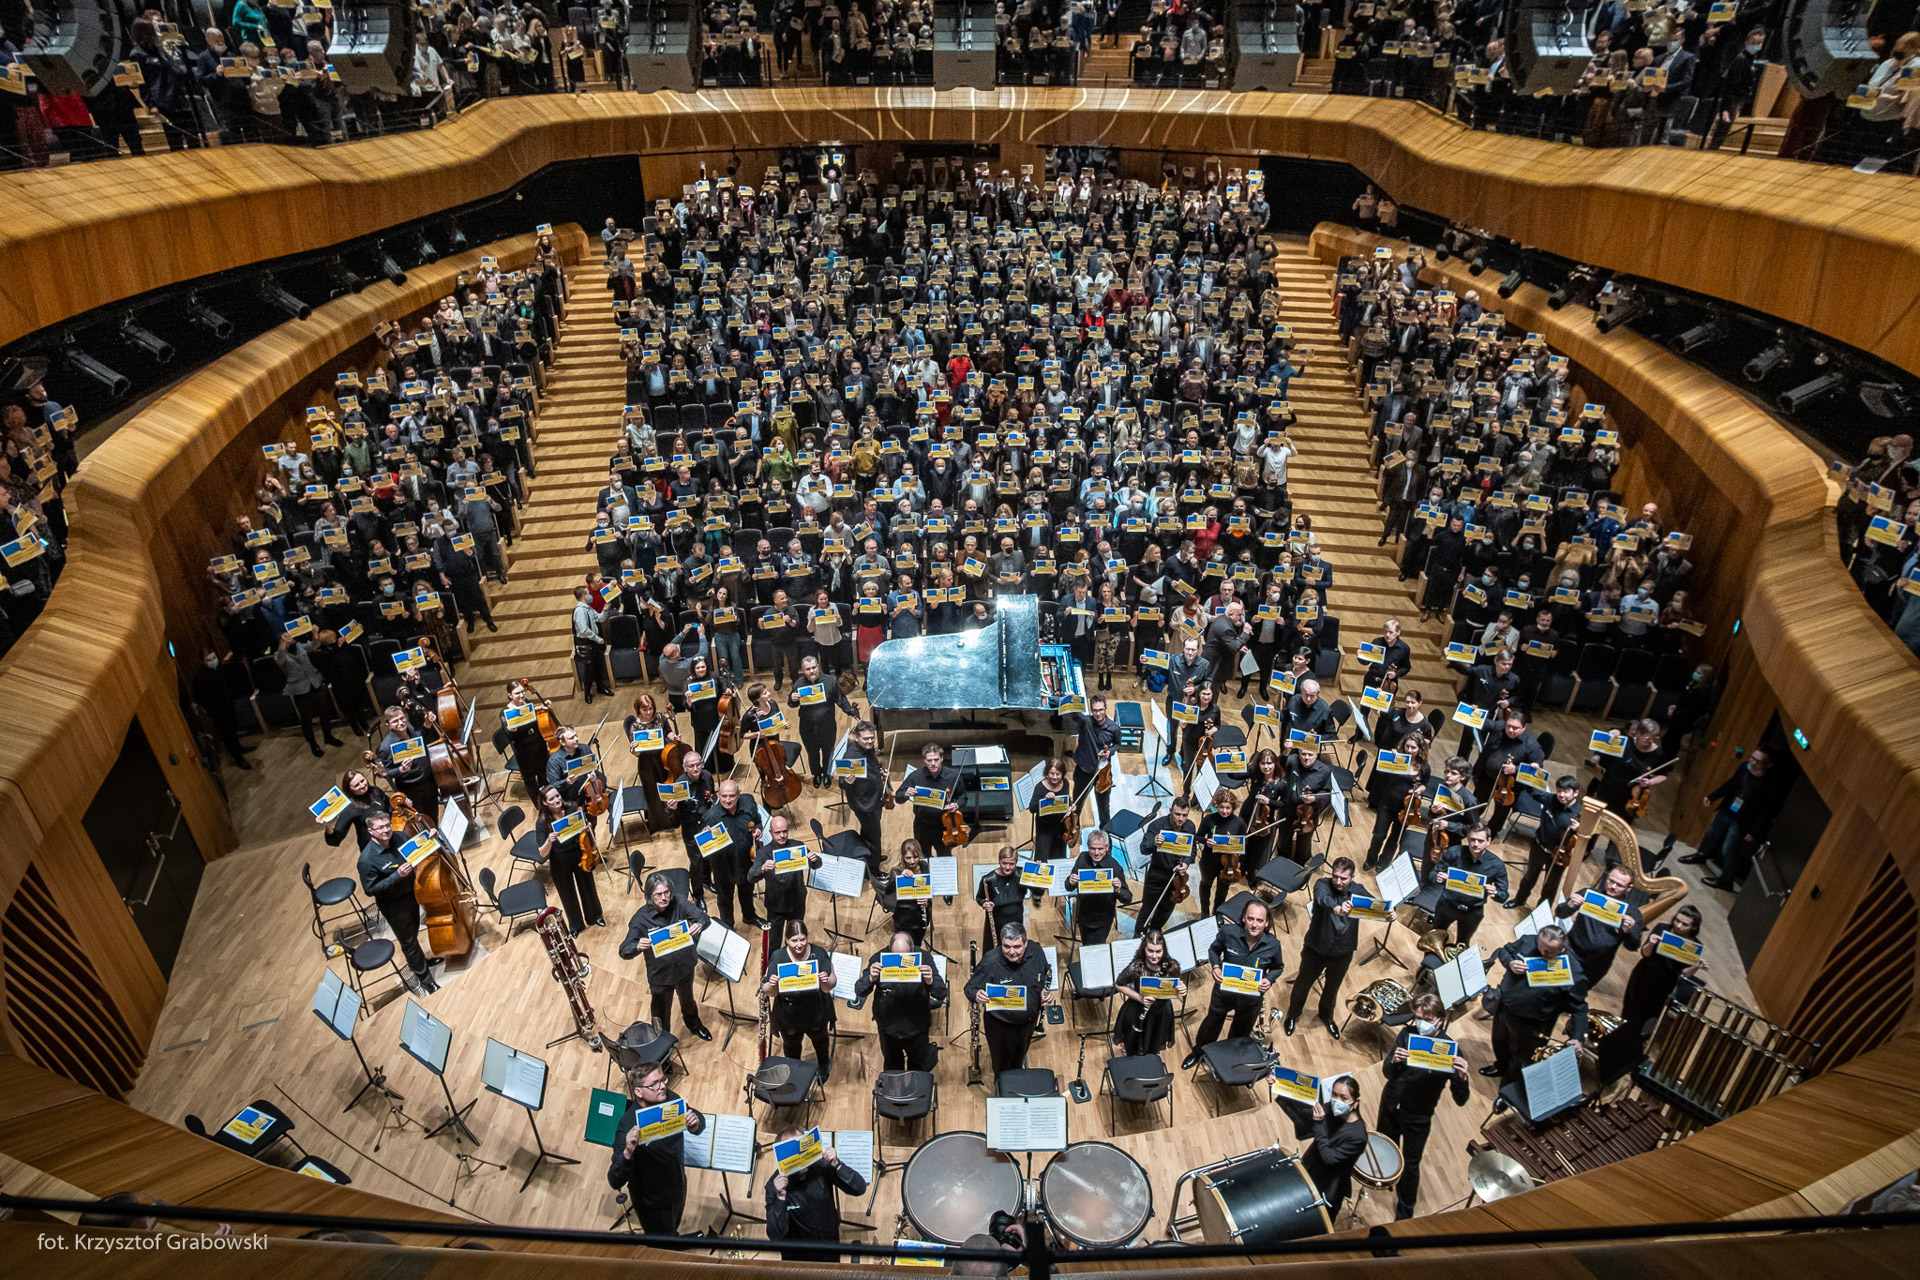 Brad Mehldau & Brno Philharmonic